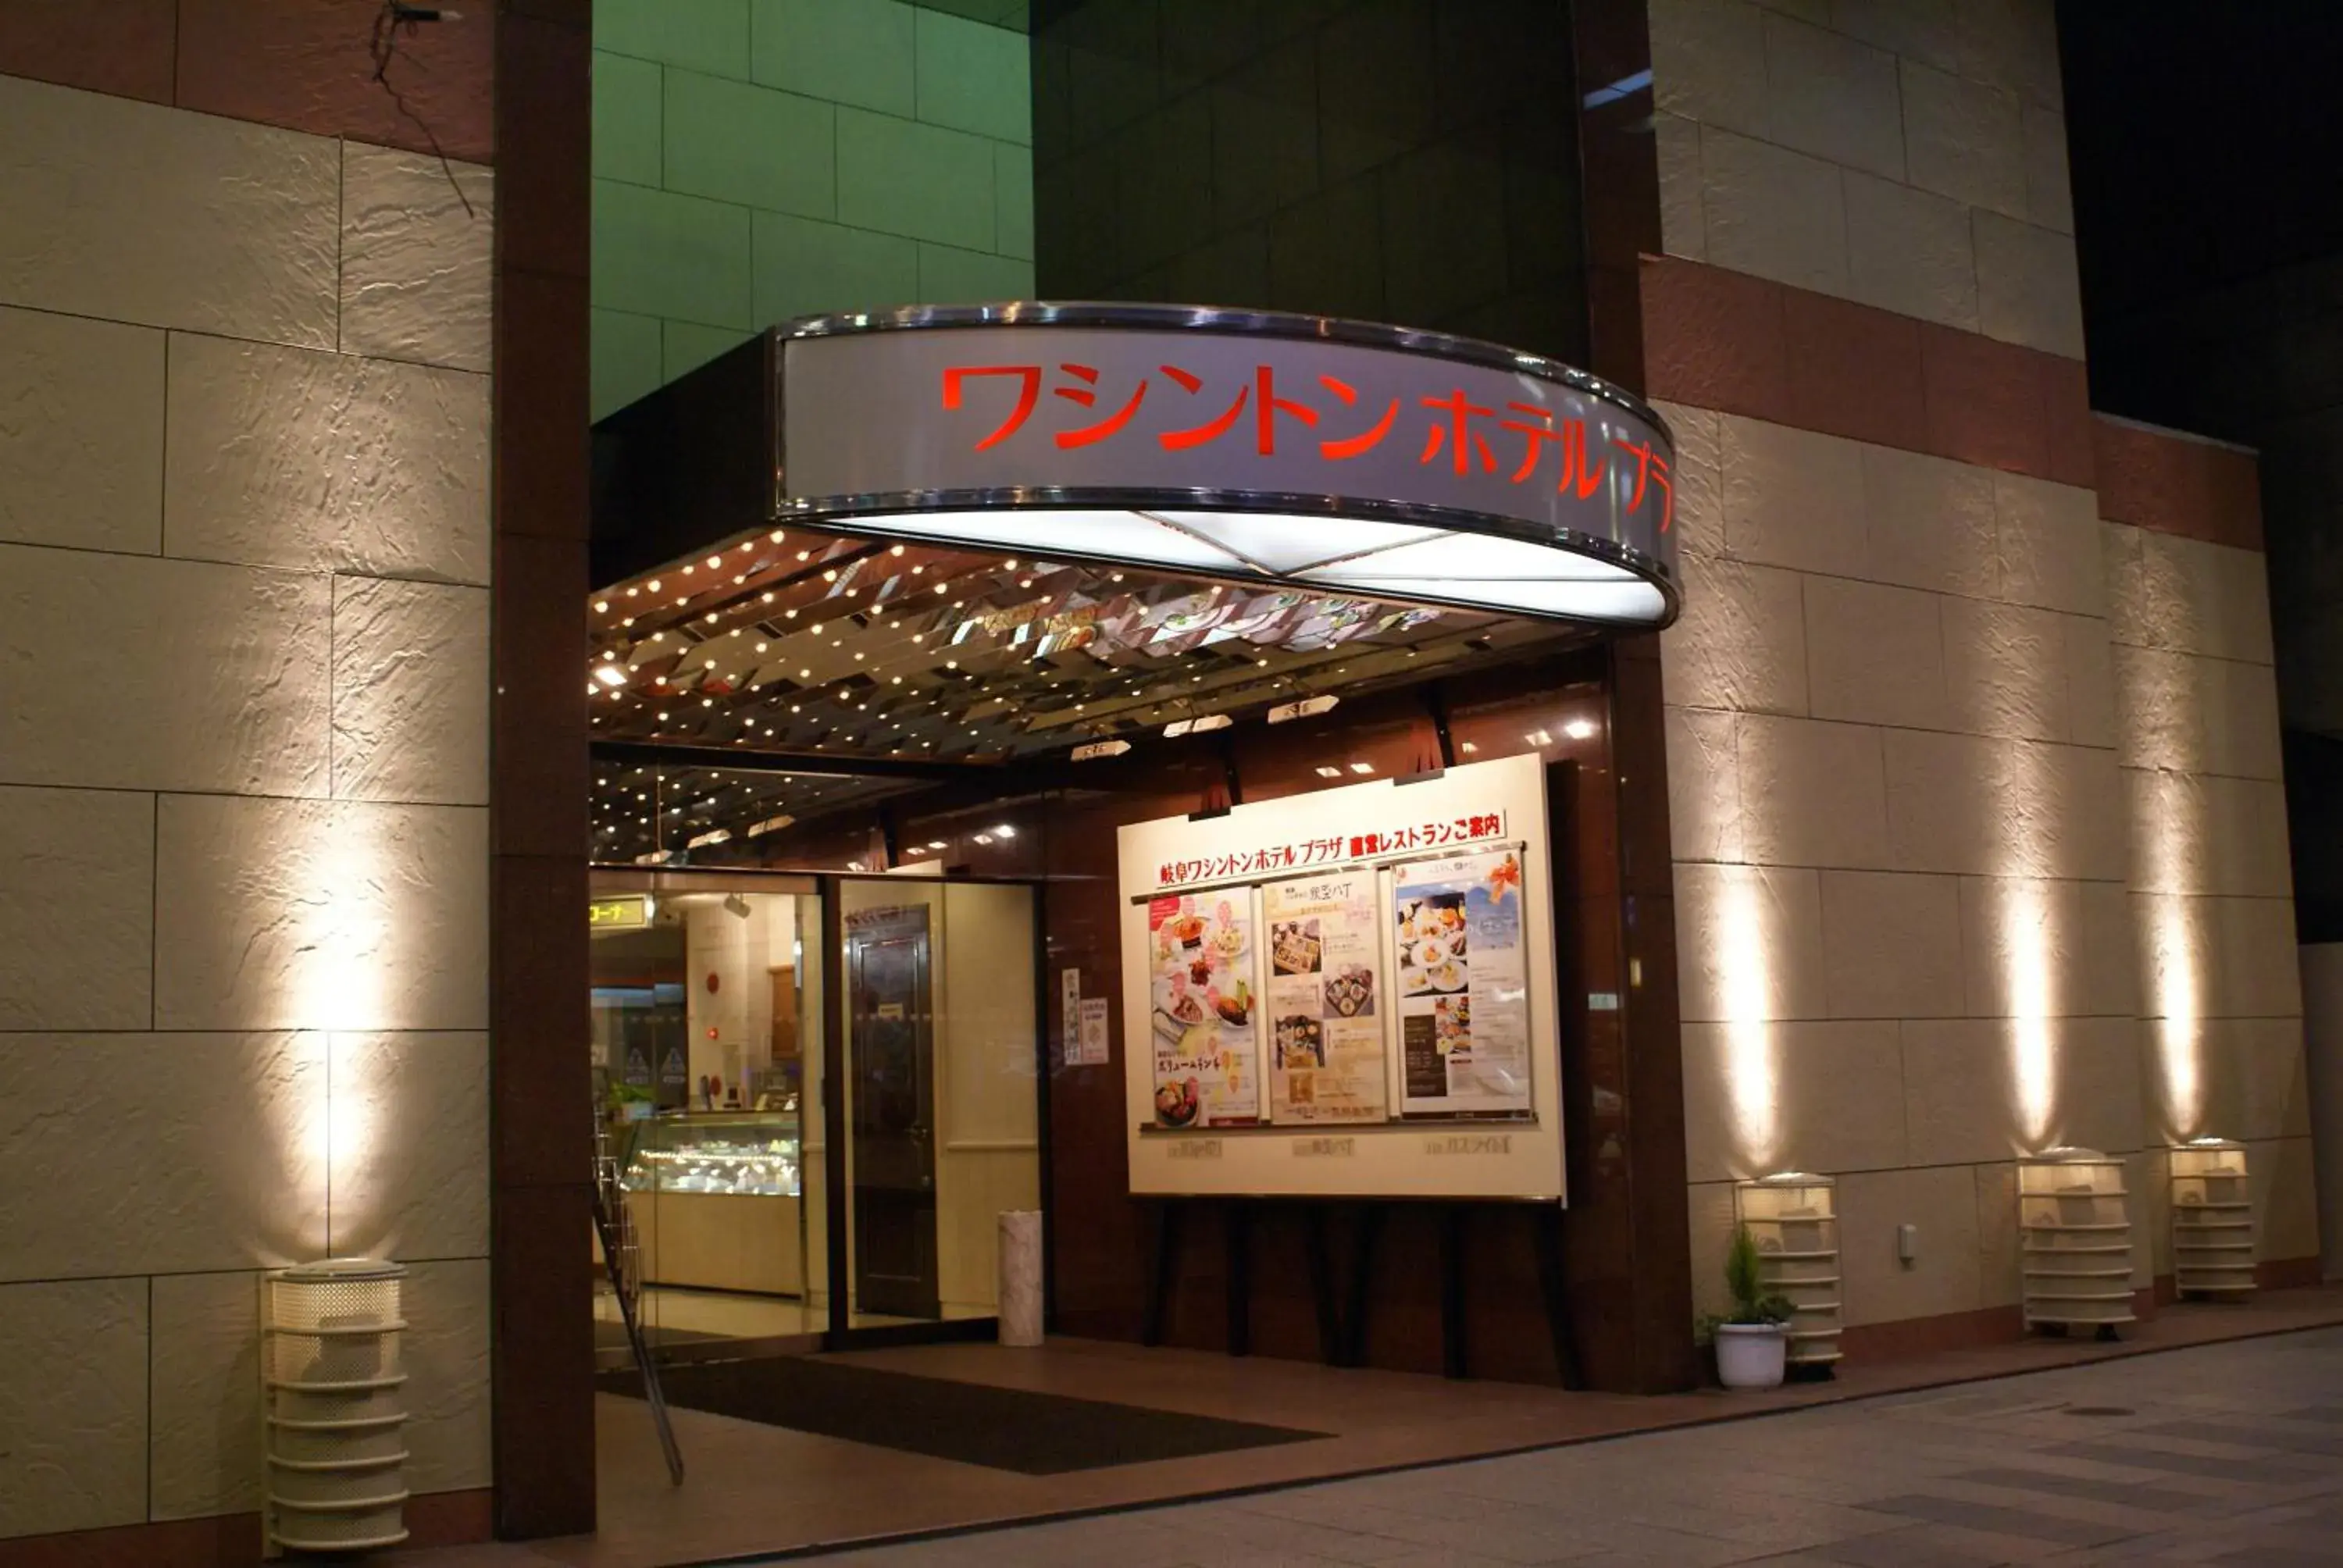 Facade/entrance in Gifu Washington Hotel Plaza